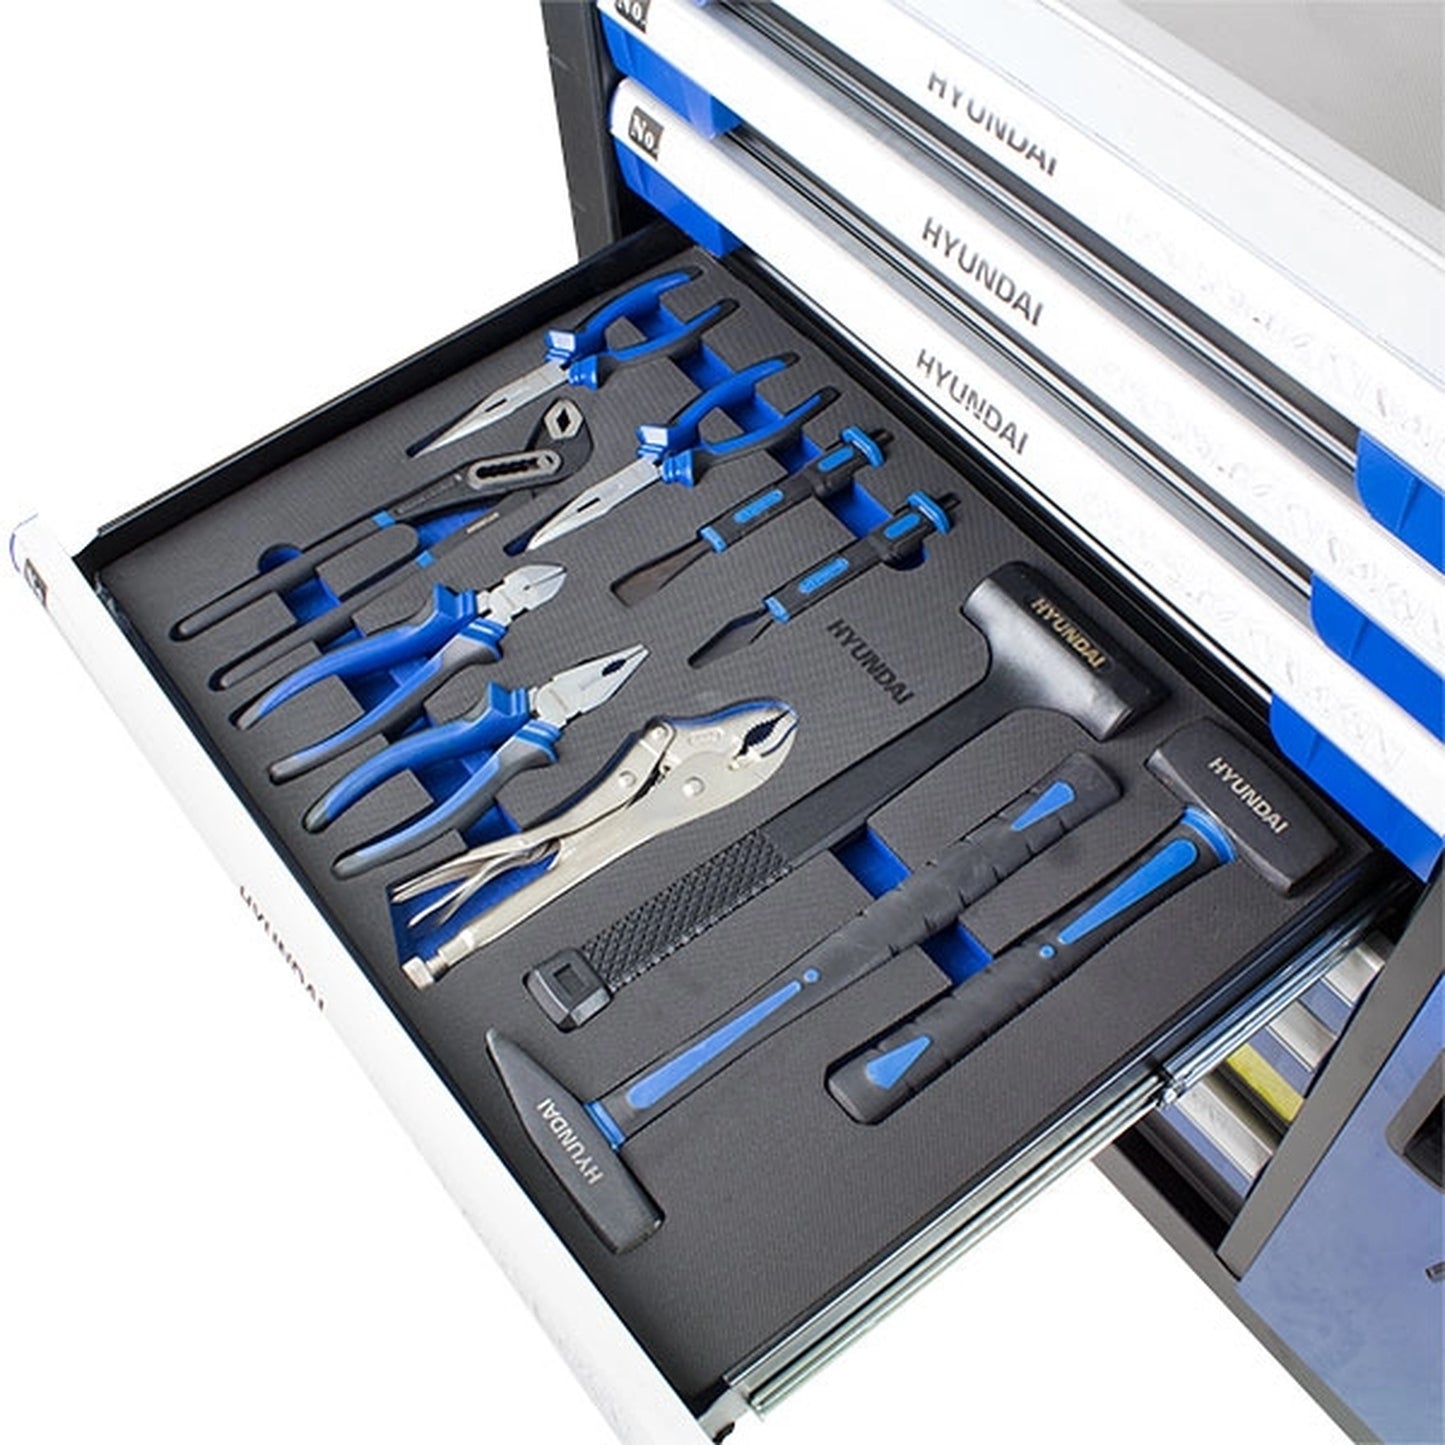 Hyundai HYTC9004 Roller Premium Tool Chest Cabinet - XXL Stainless Steel Top